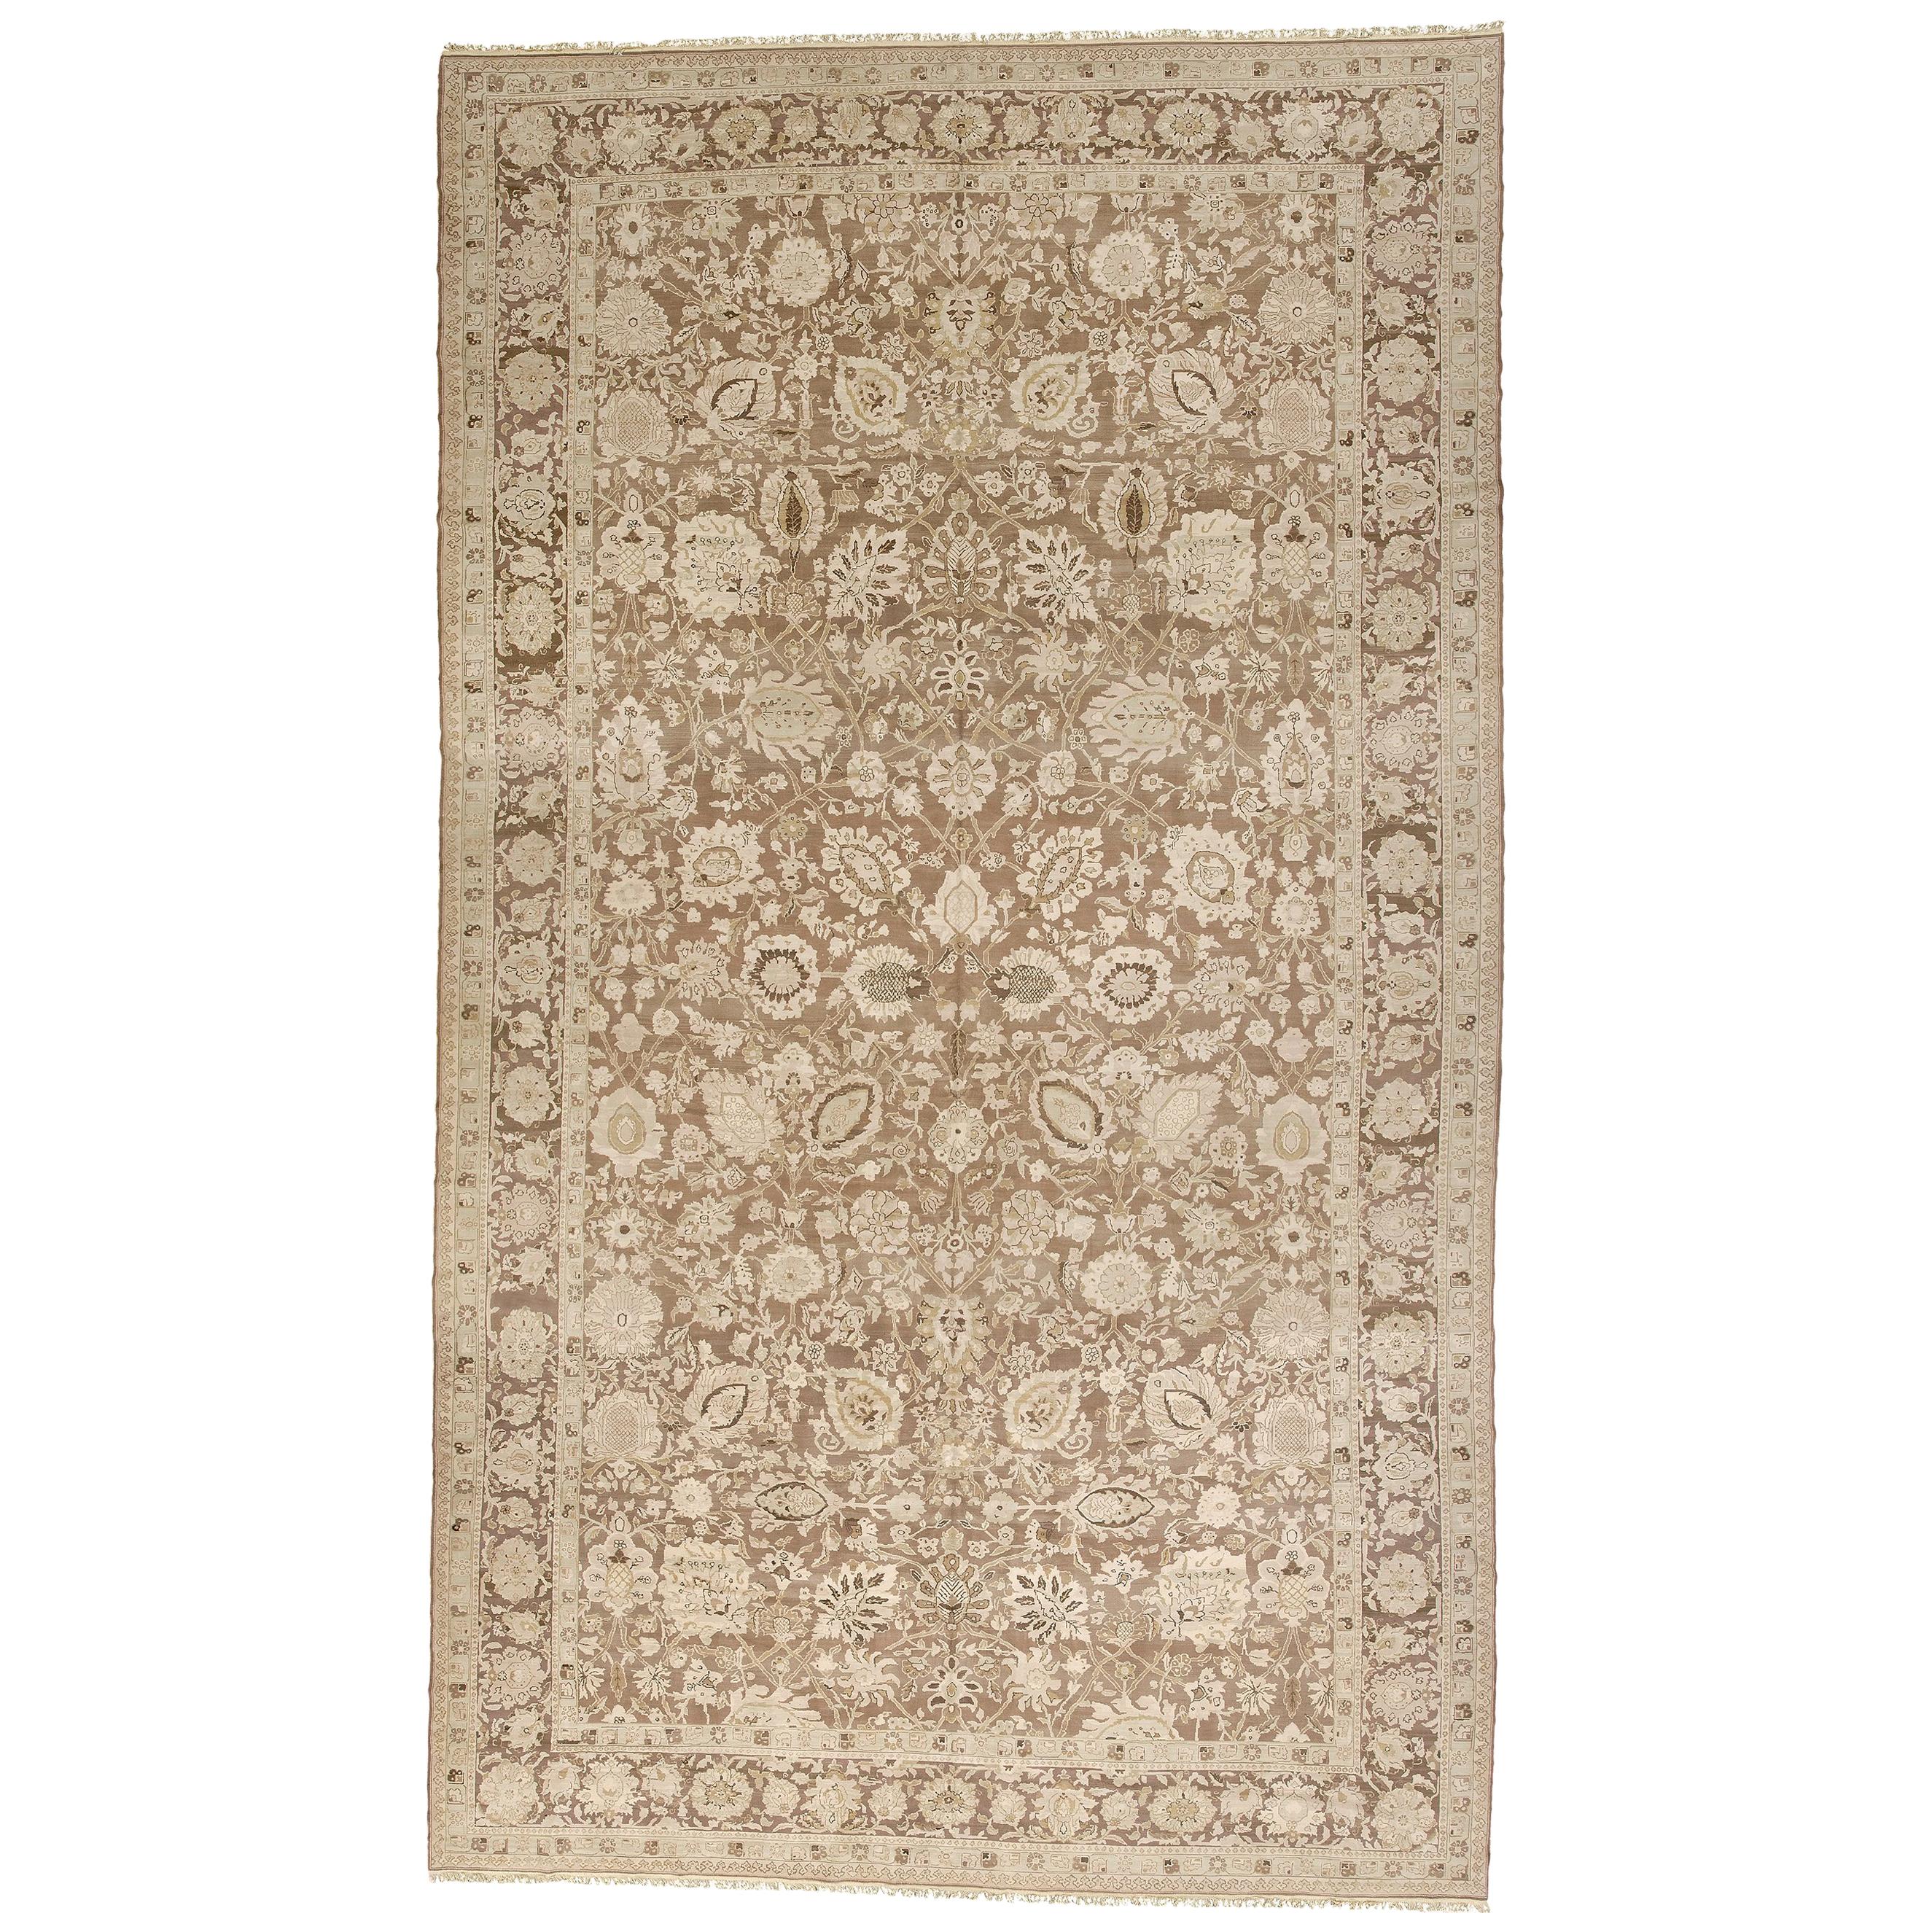 Contemporary 'Shah Abus' Handwoven Carpet For Sale